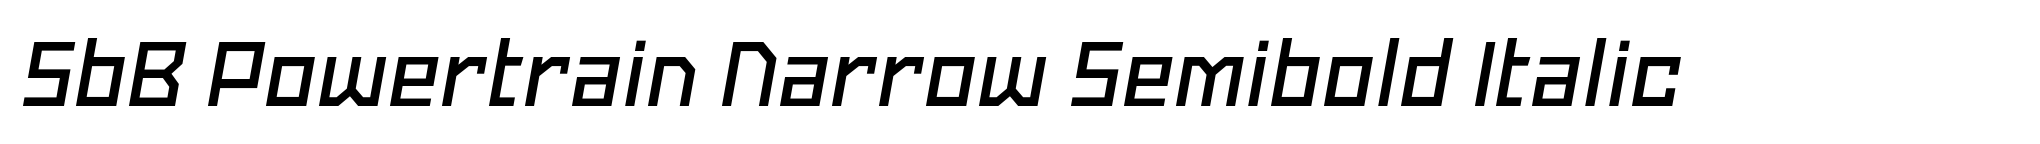 SbB Powertrain Narrow Semibold Italic image